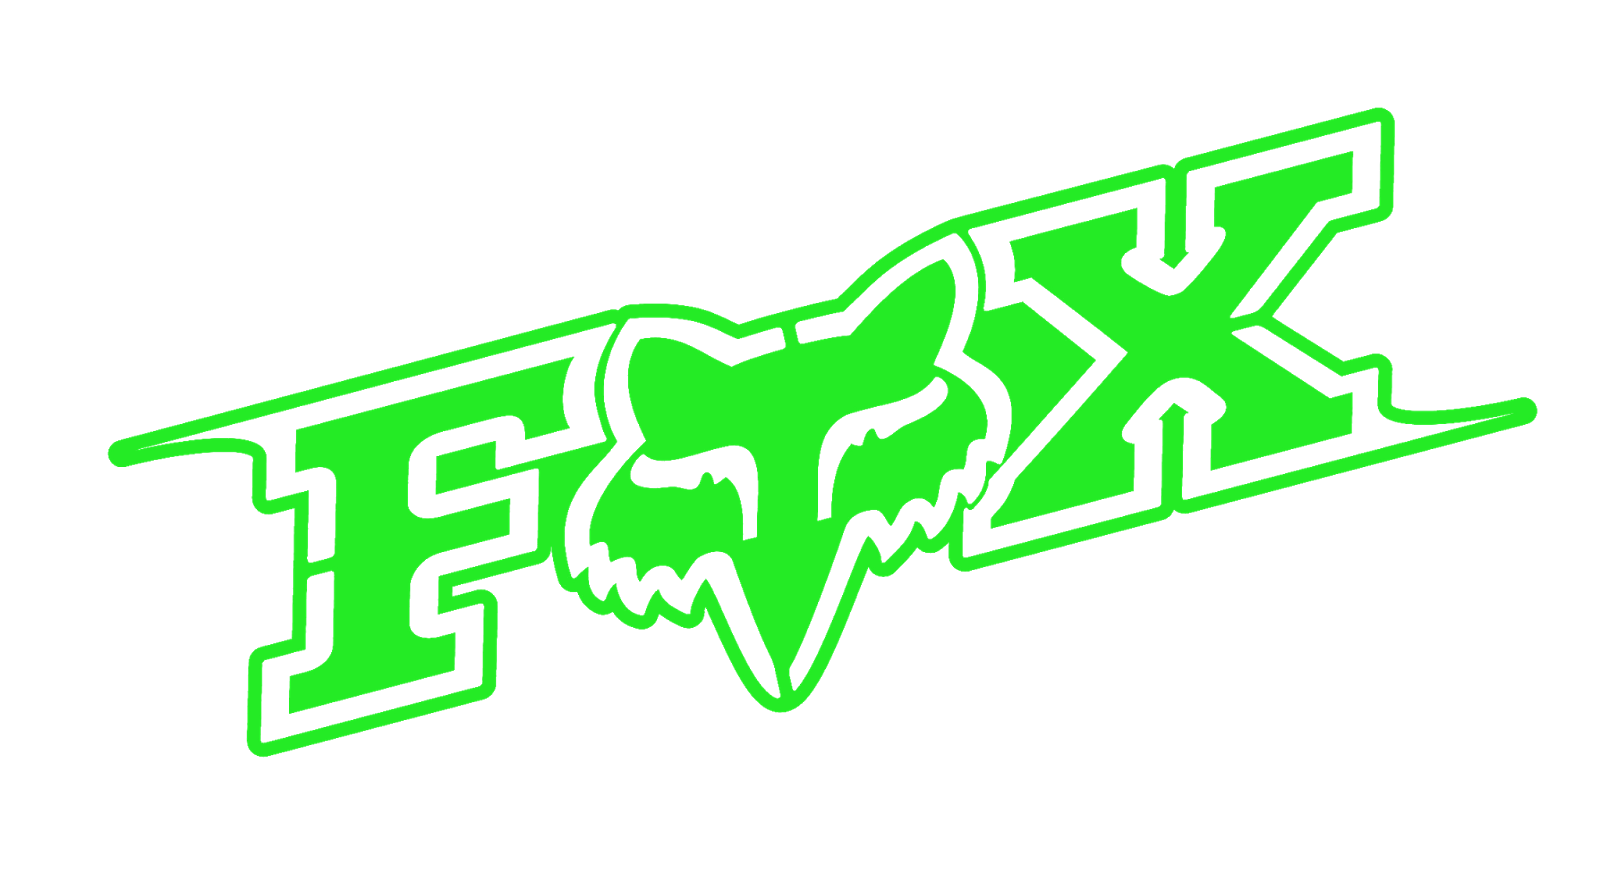 Green Fox Racing Logo - Green Fox Racing Wallpaper For iPhone. Amazing Wallpaper. Fox